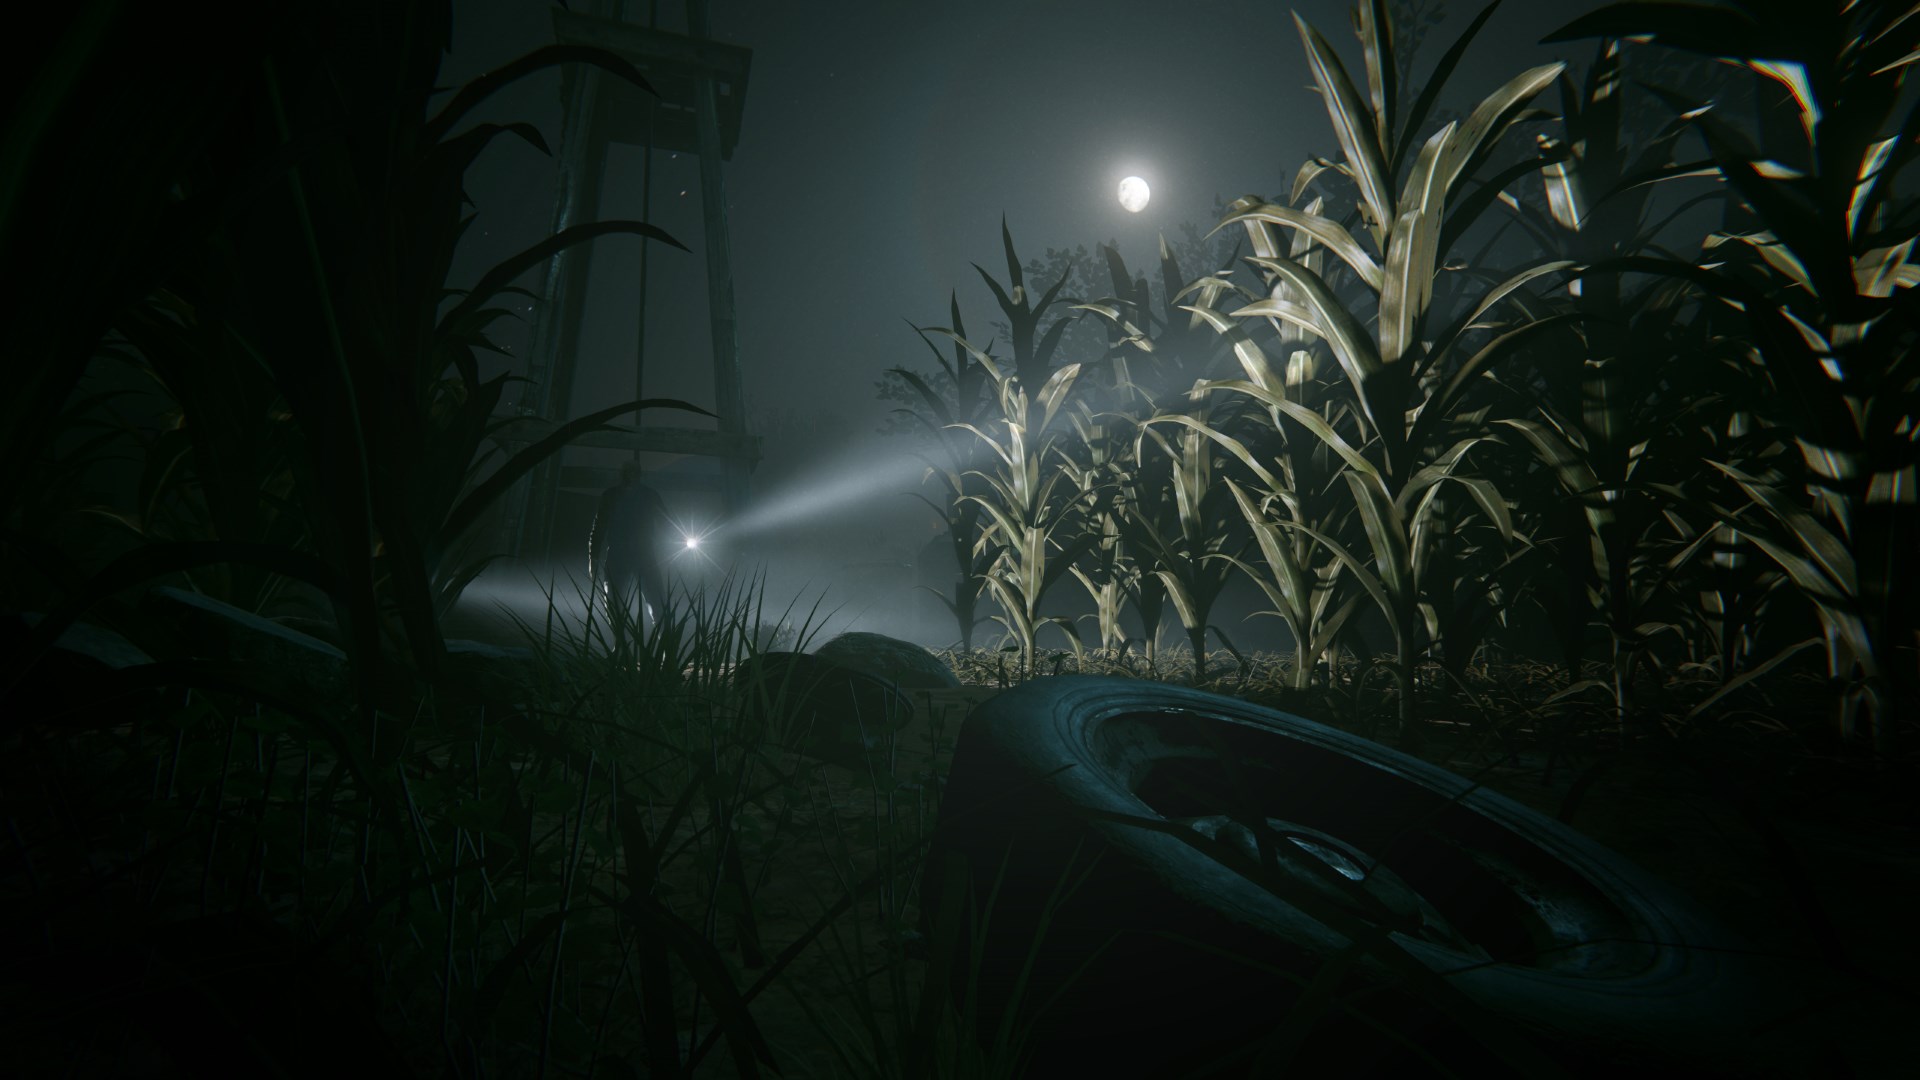 A cornfield at night, illuminated by a flashlight